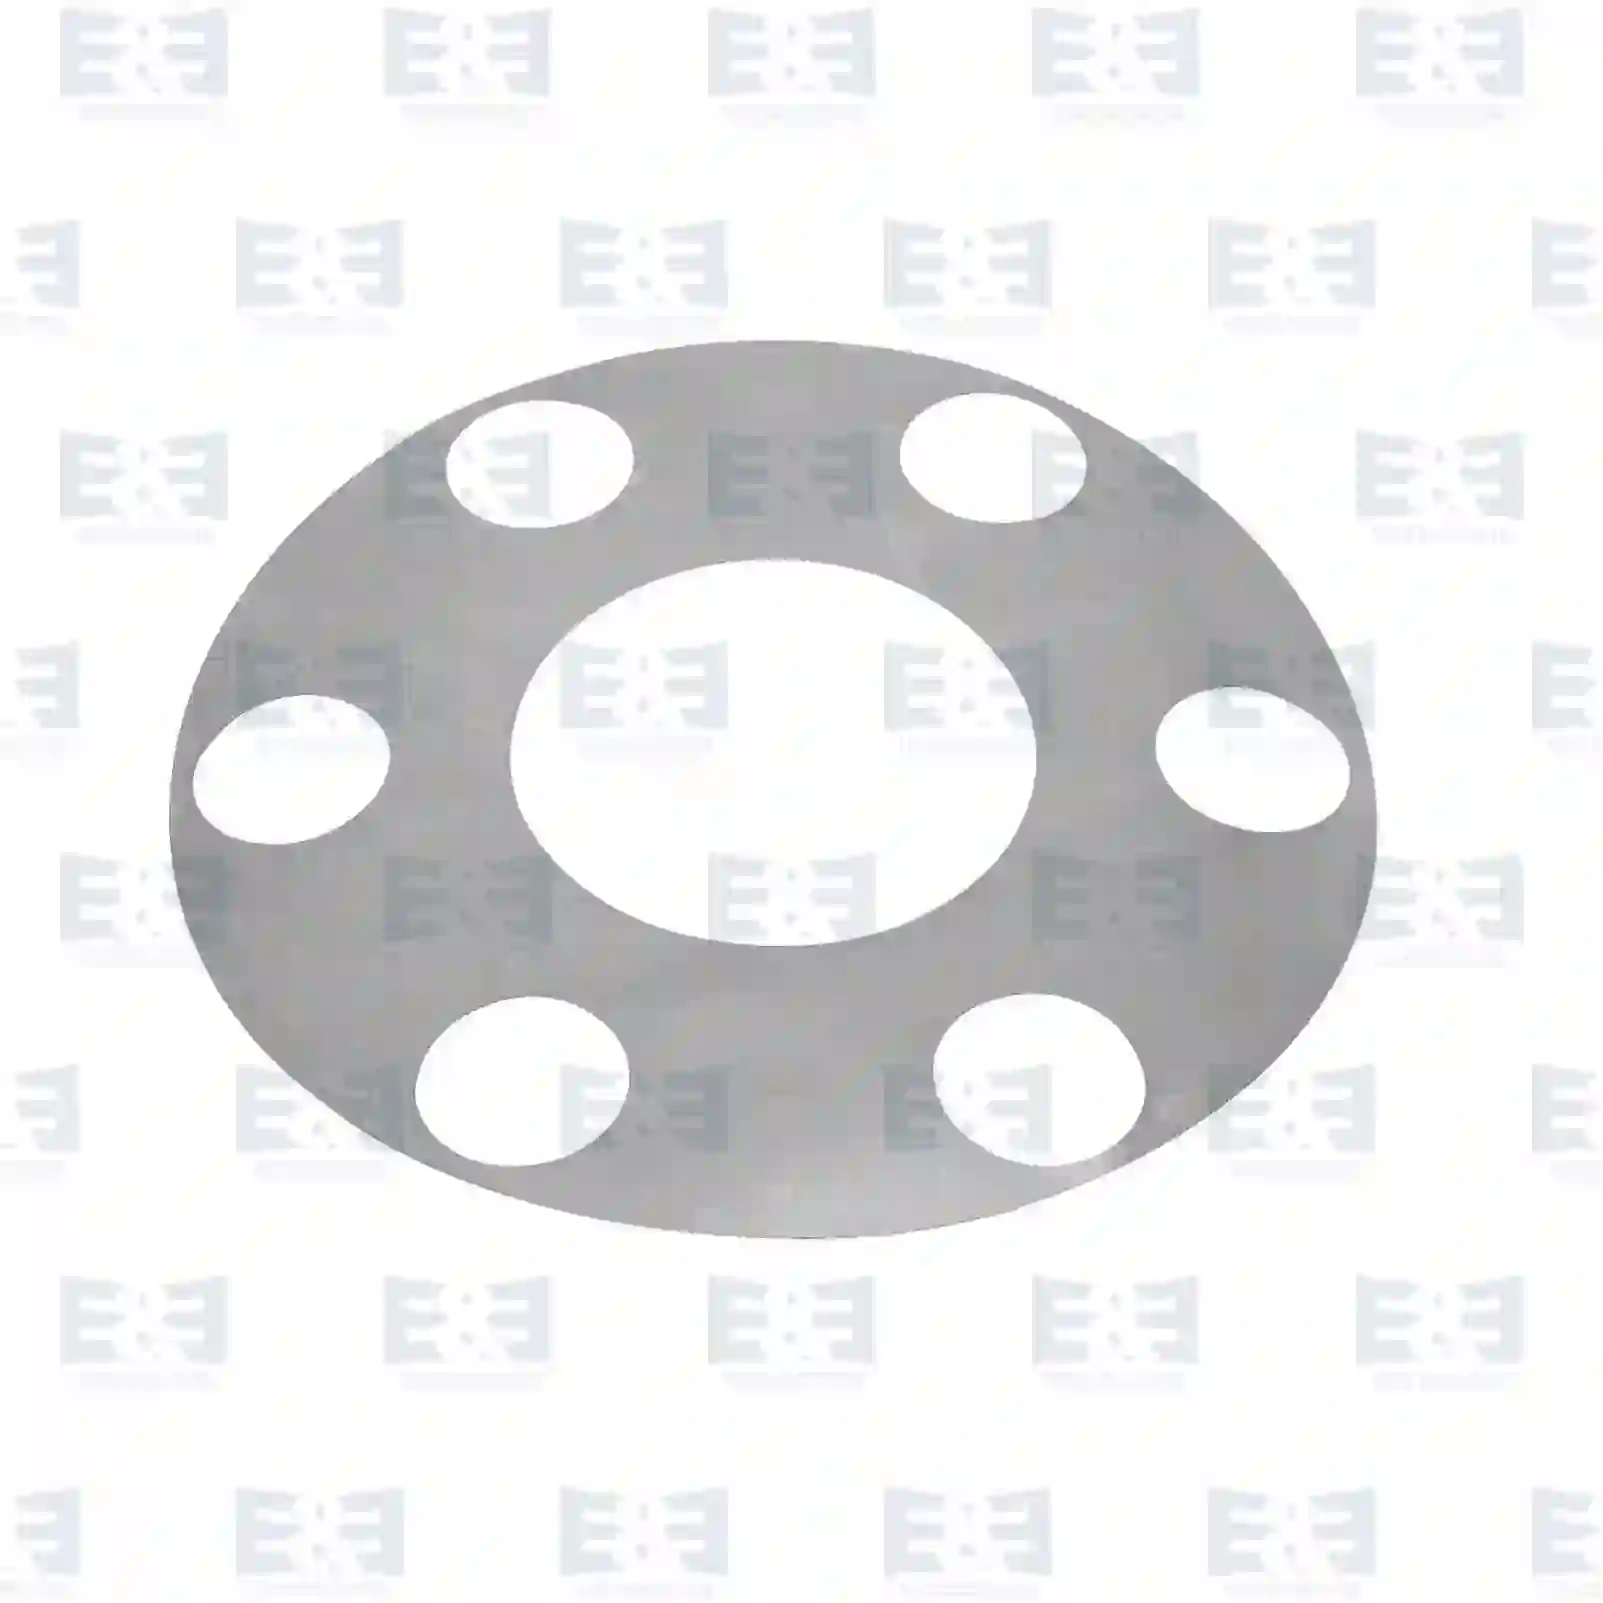  Washer || E&E Truck Spare Parts | Truck Spare Parts, Auotomotive Spare Parts